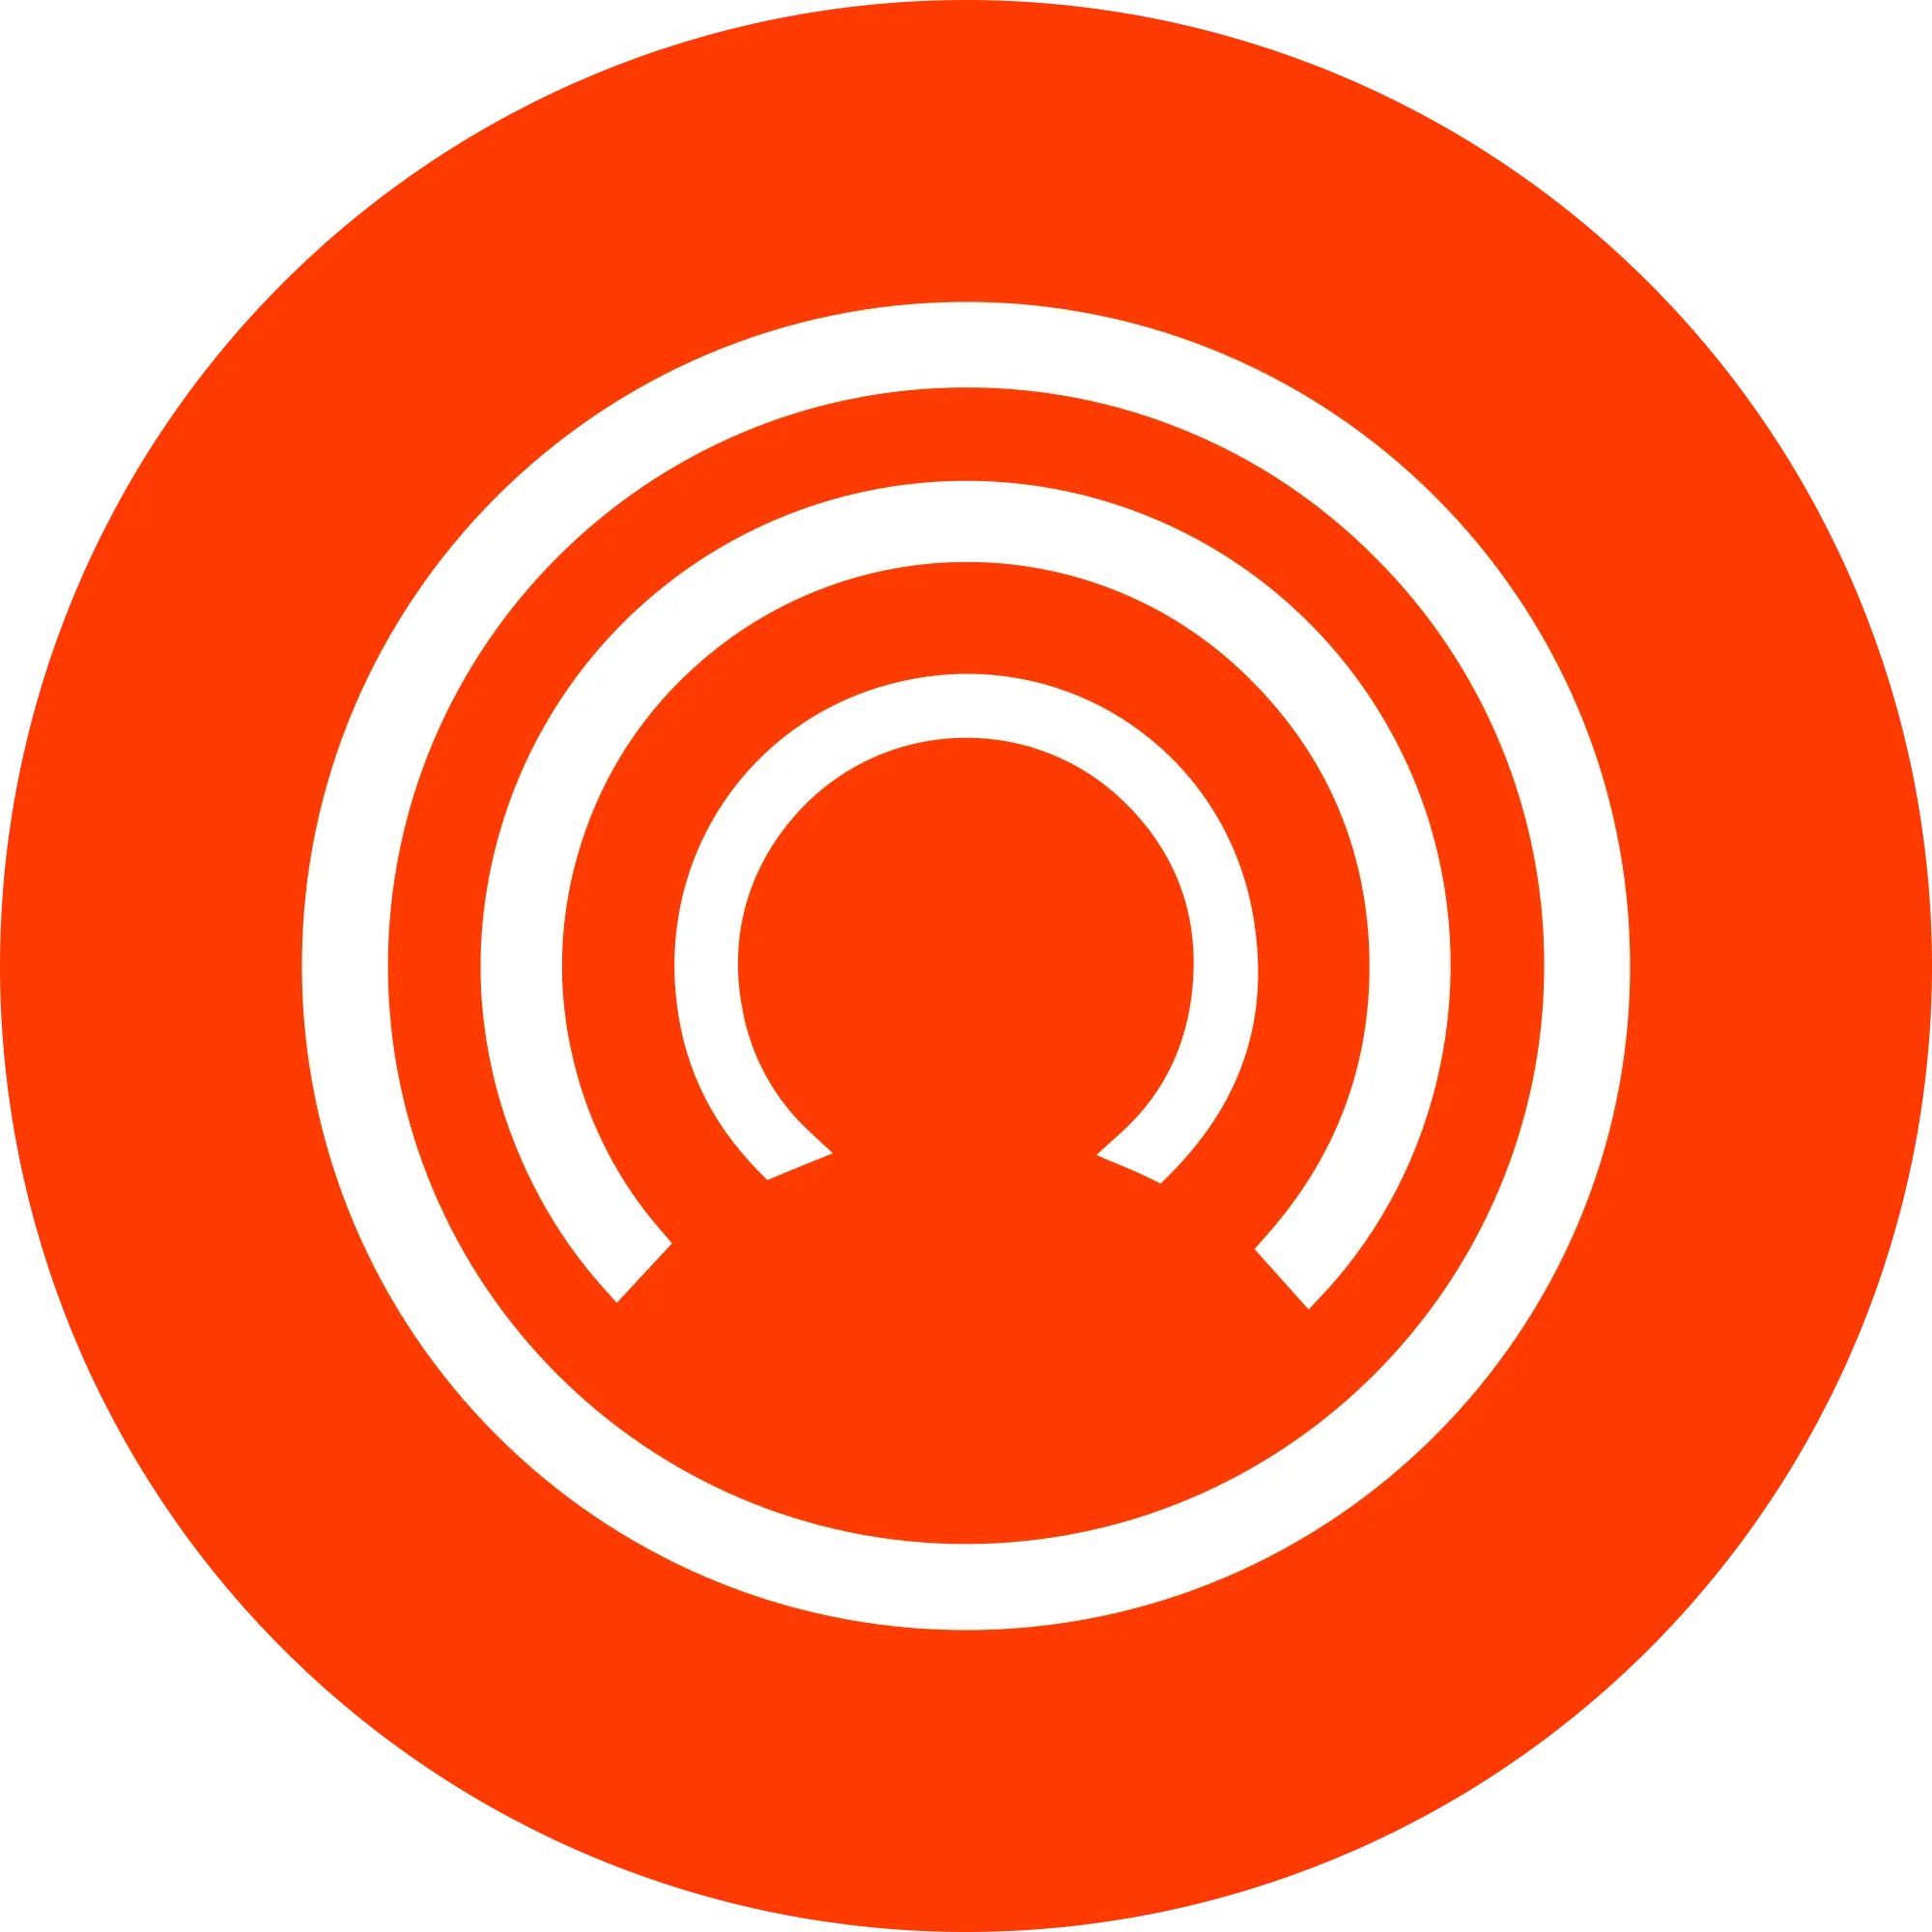 CloakCoin logo in png format